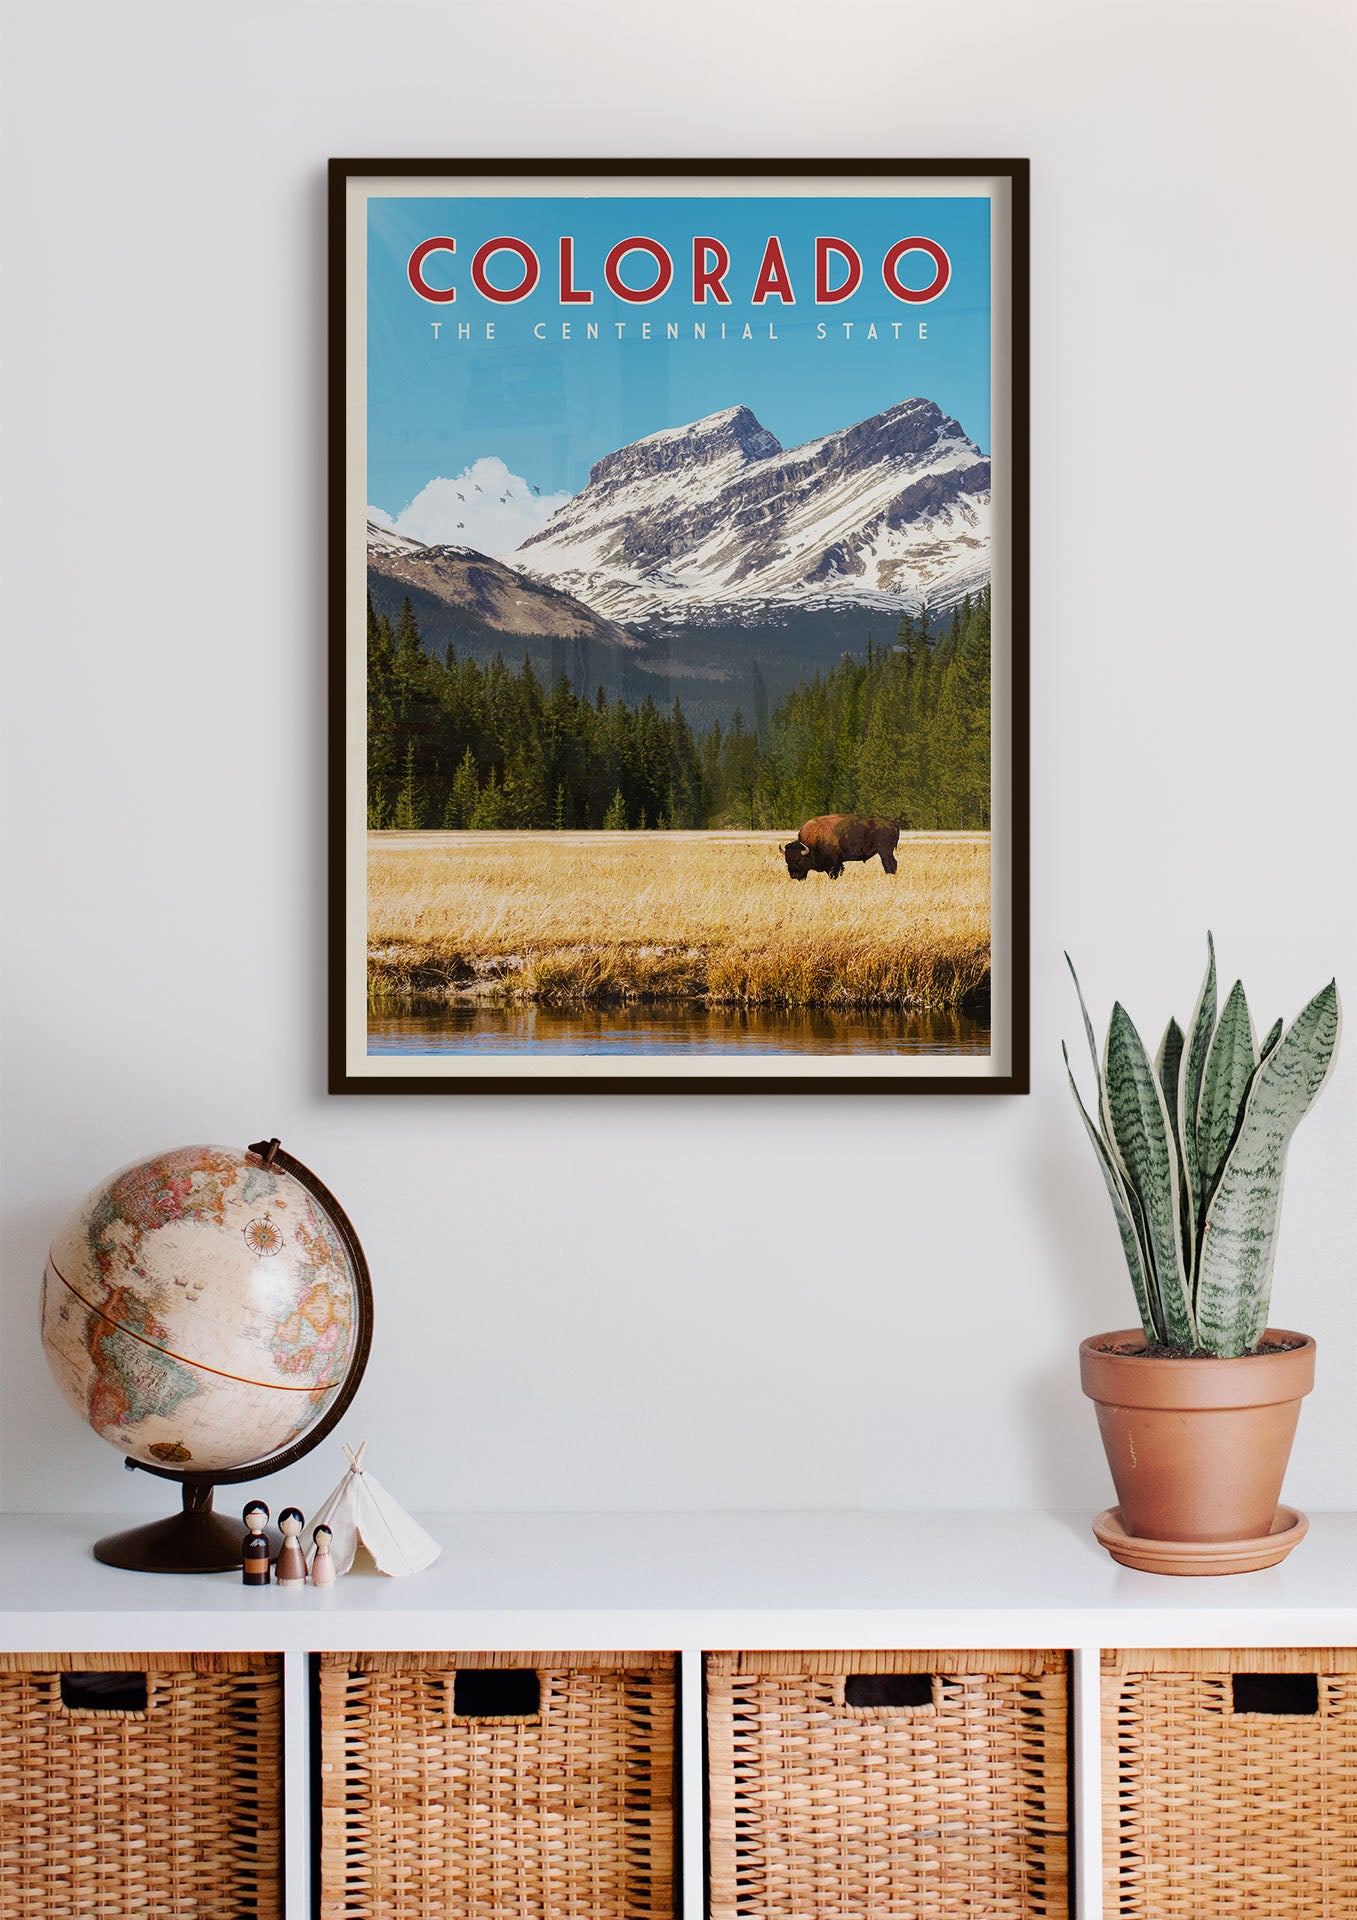 Colorado - Vintage Travel Print - Vintaprints